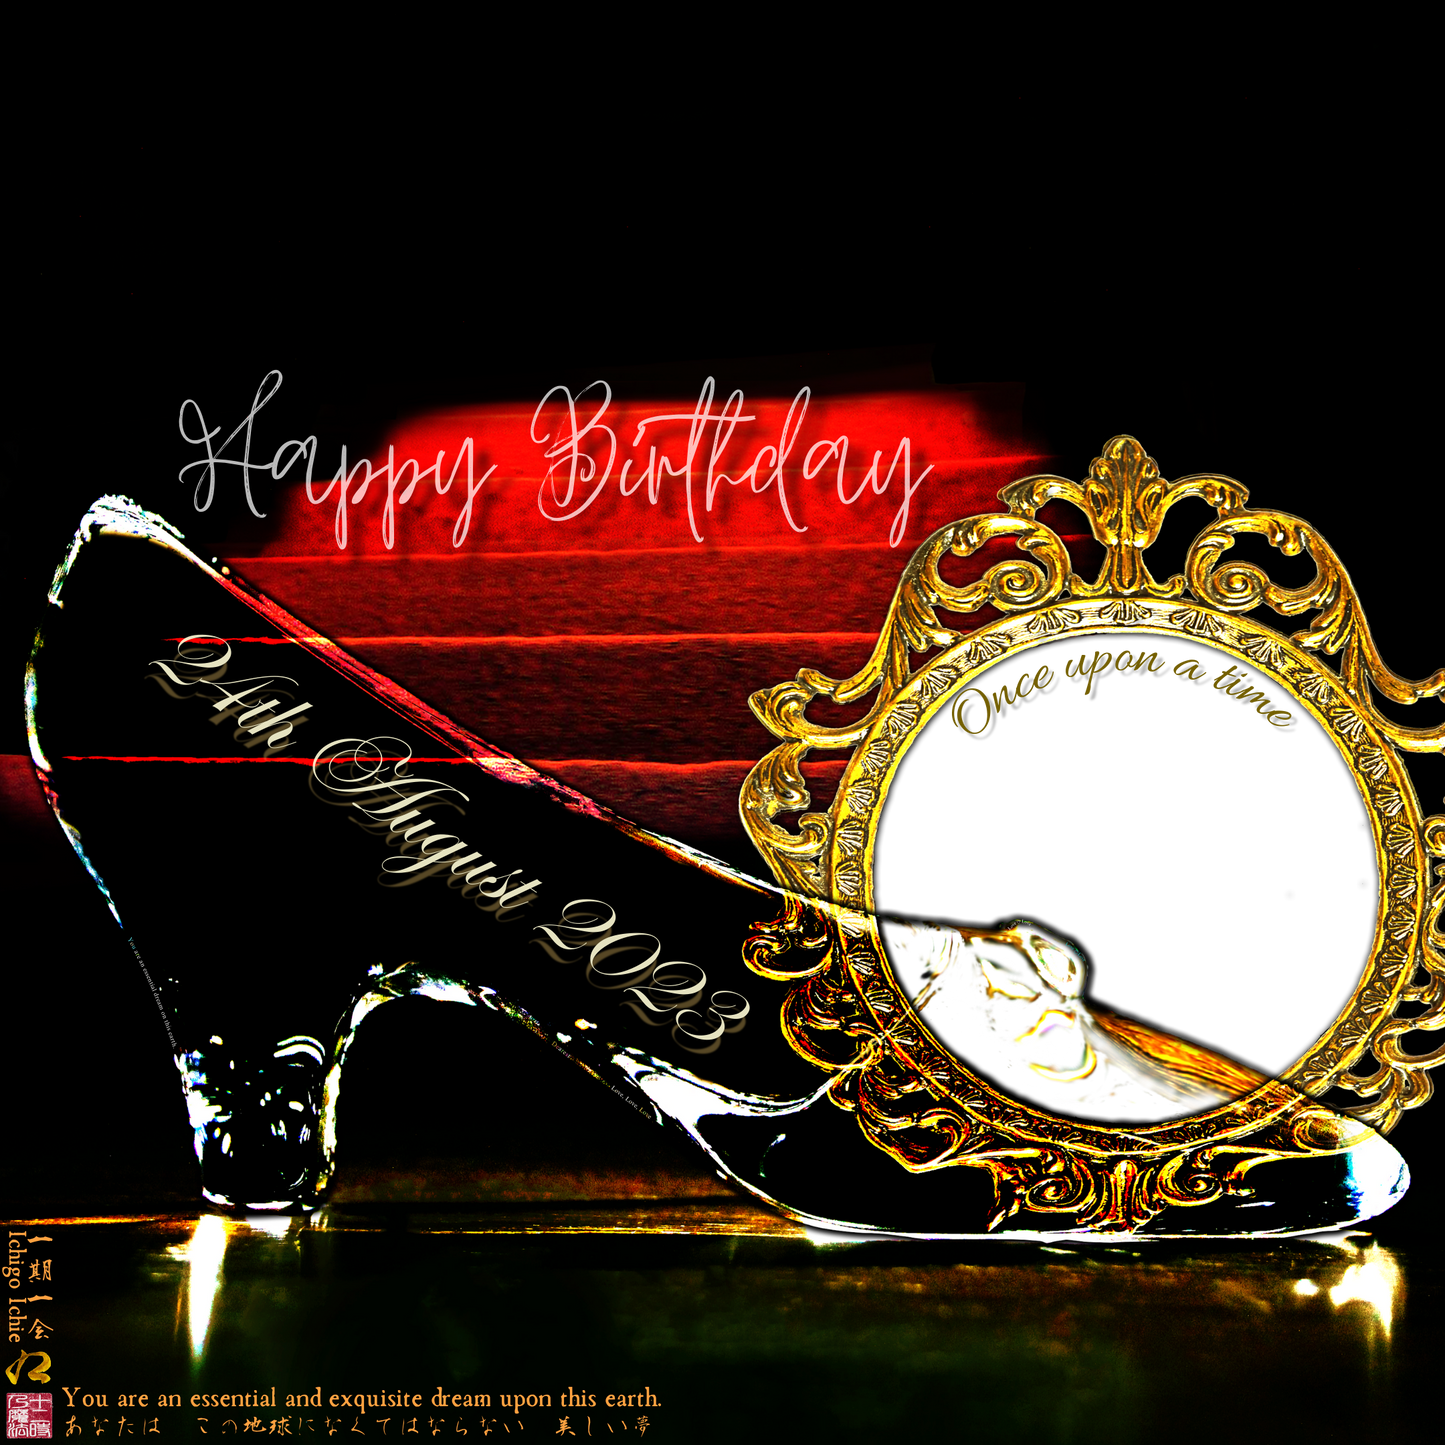 Happy Birthday Glass Slipper "Ichigo Ichie" 24th August 2023 the Right (1-of-1) NFT Art